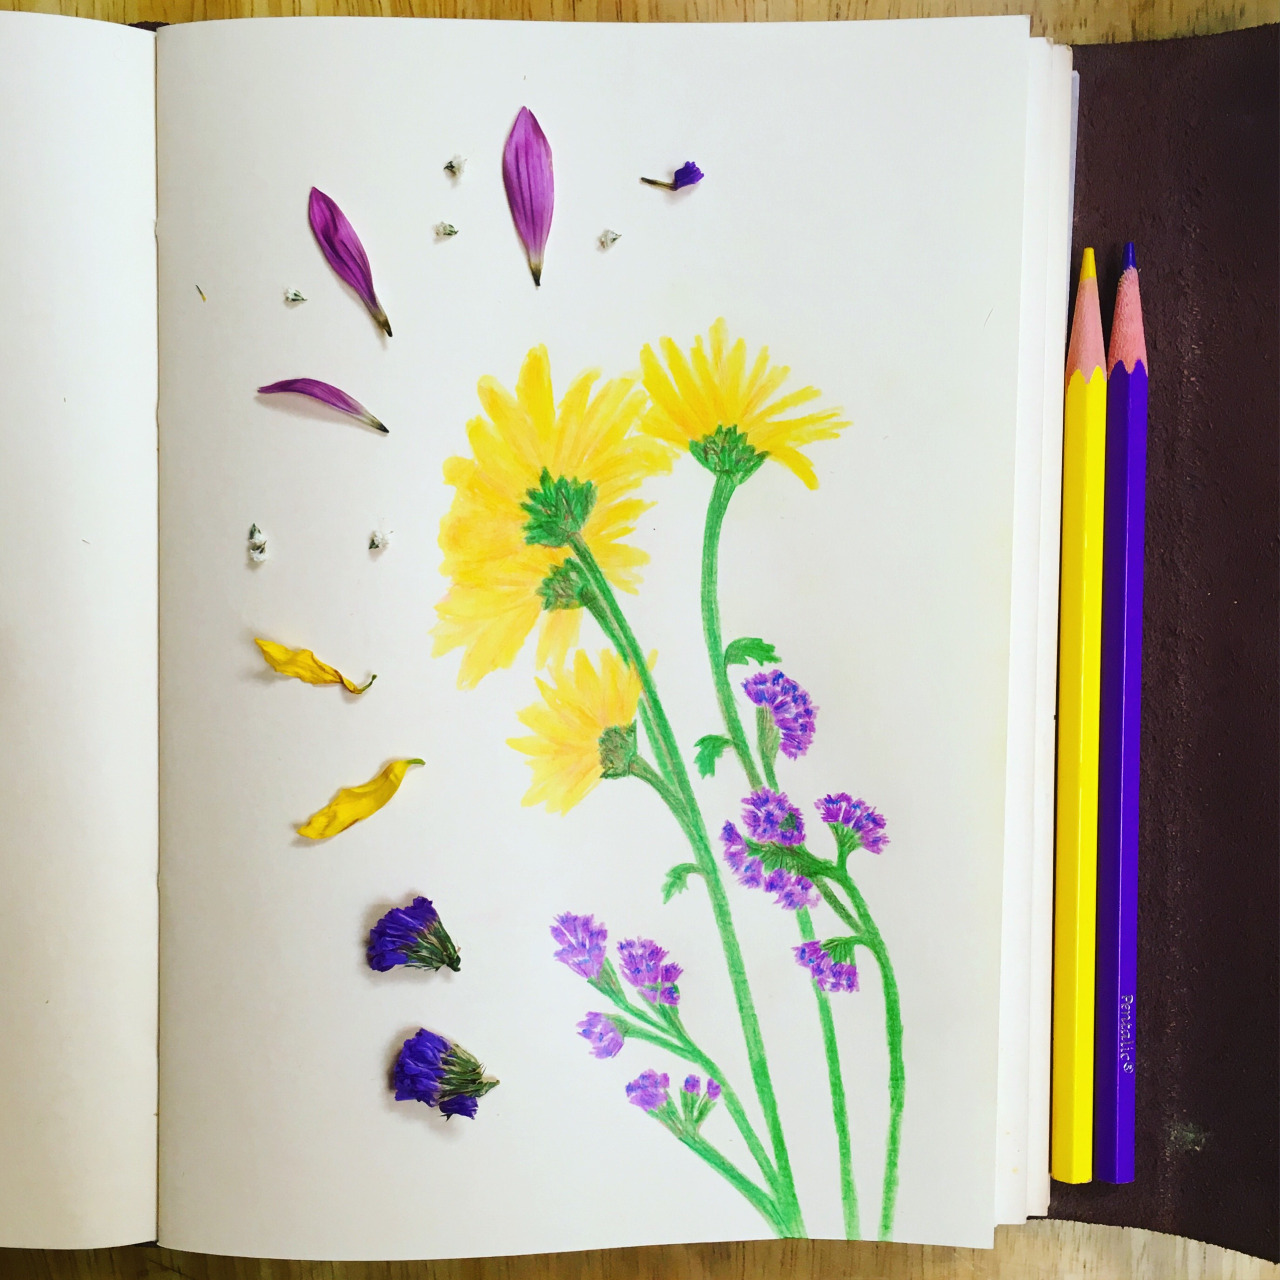 sketchbook with flowers